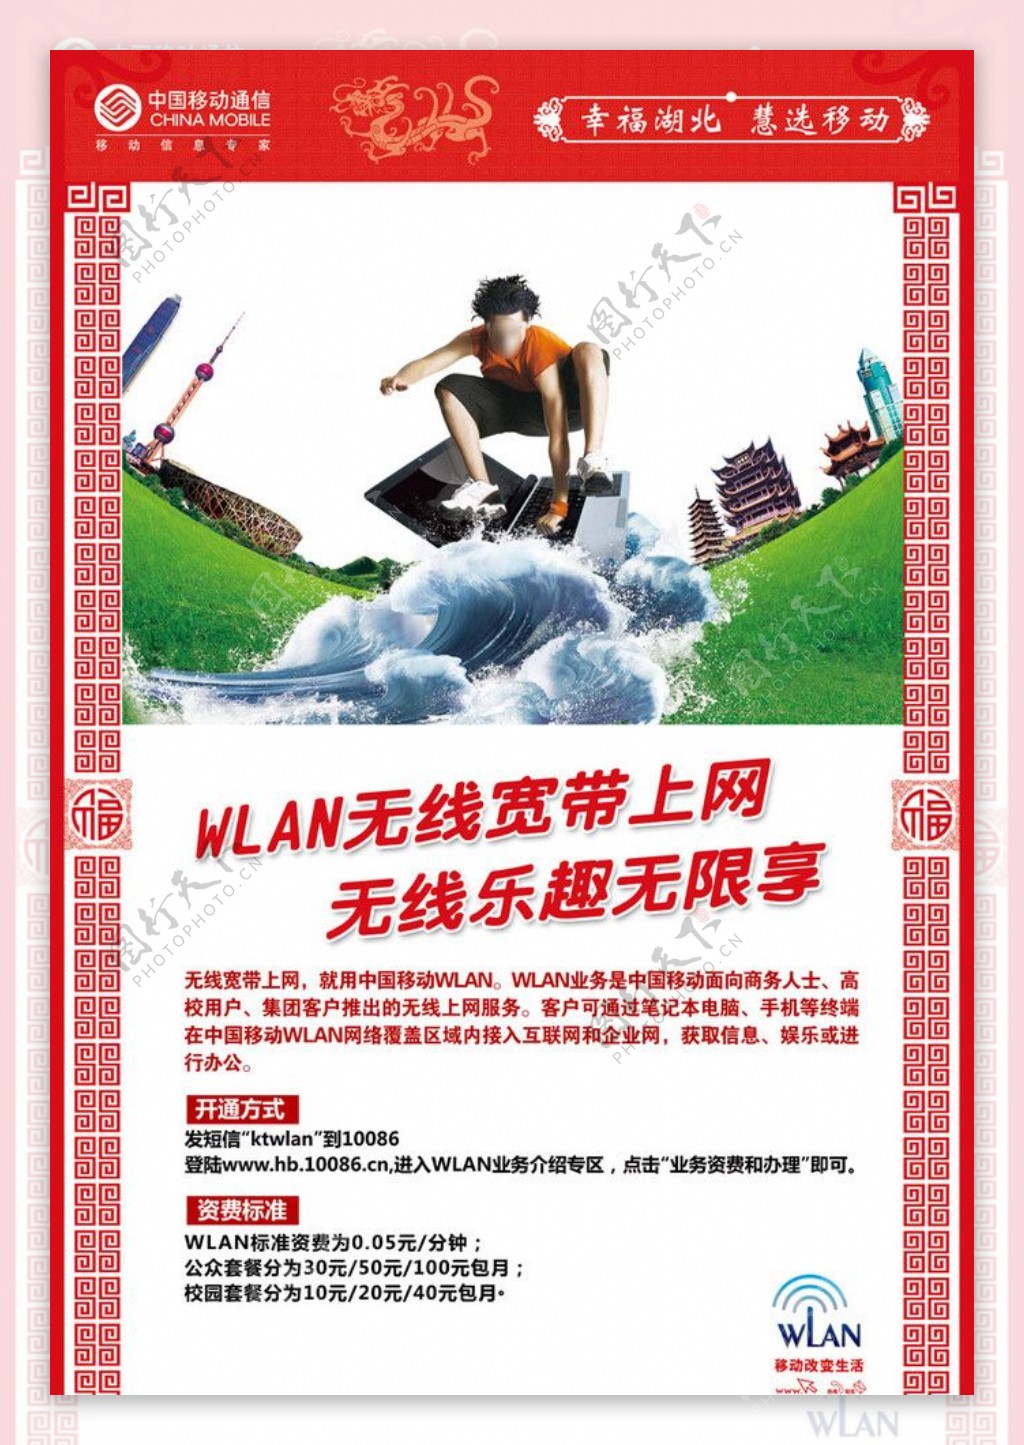 WLAN新春海报图片